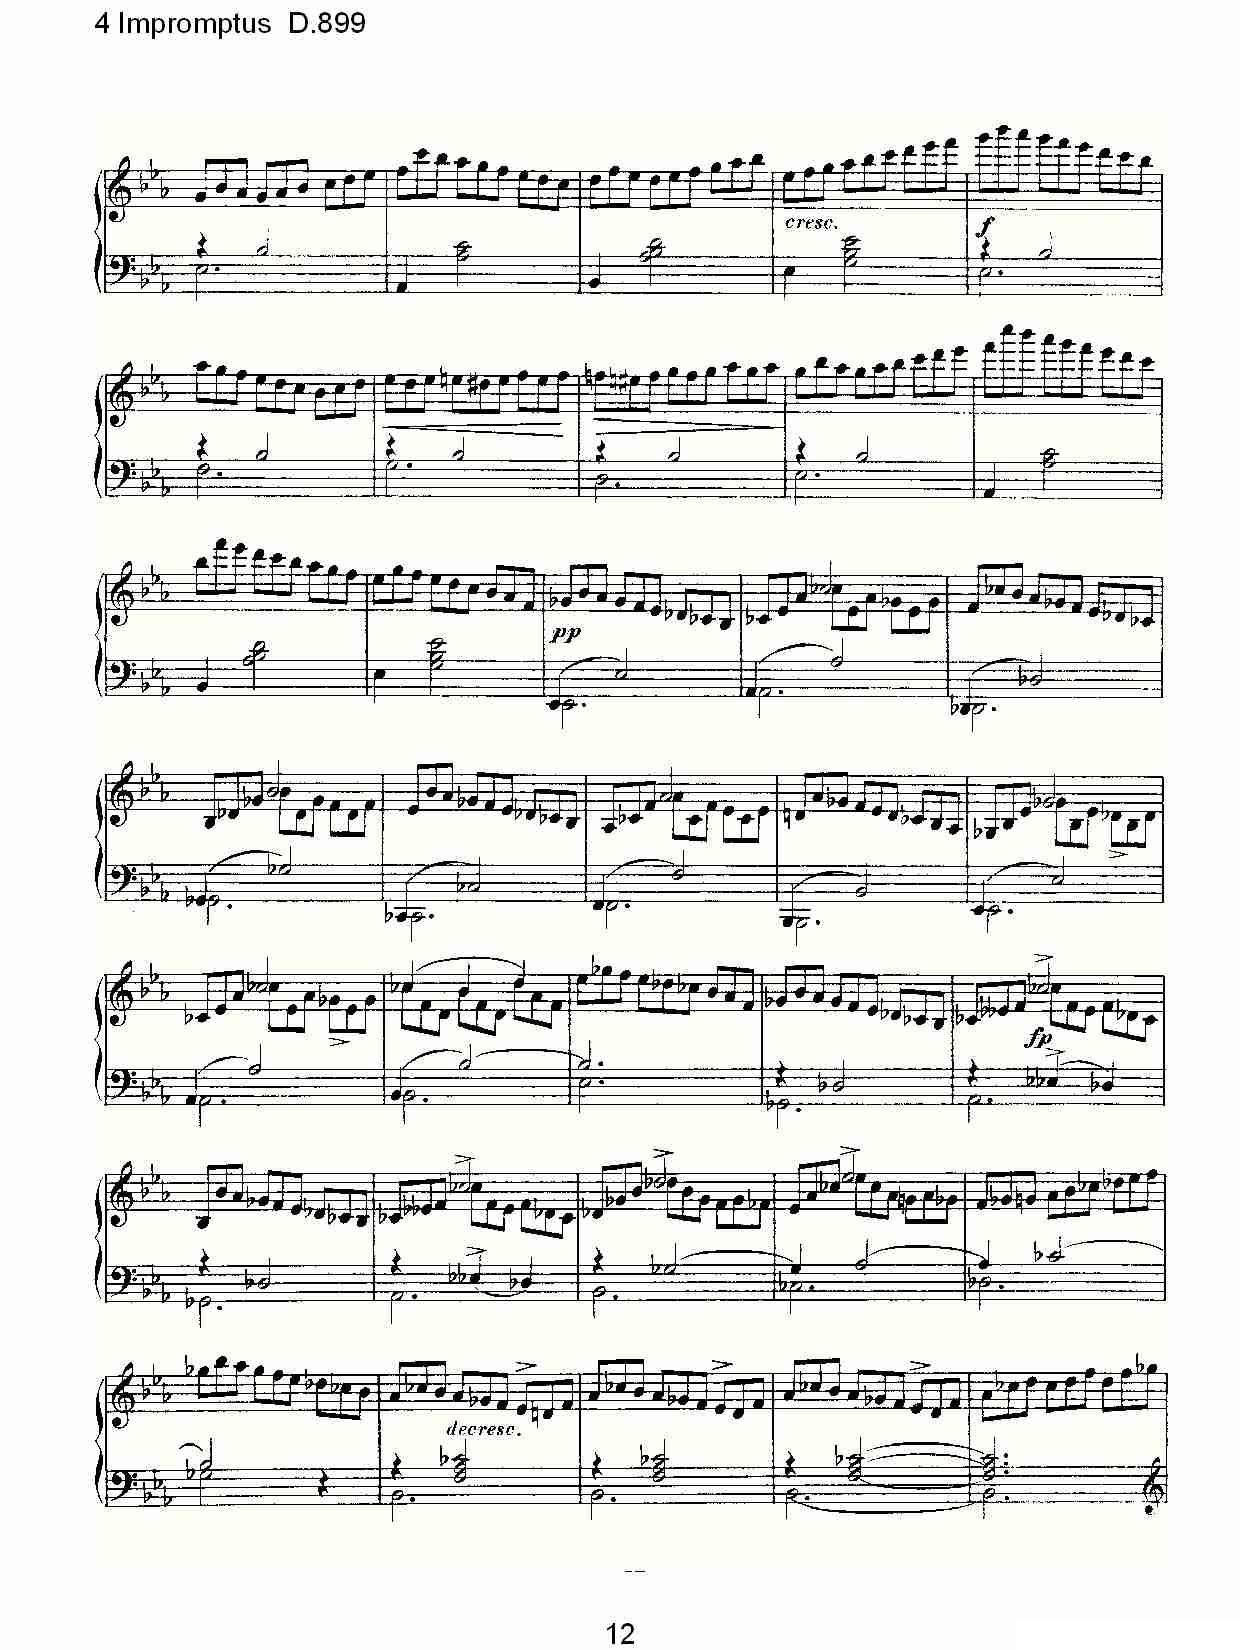 4 Impromptus D.899（4人即兴演奏 D.899）钢琴曲谱（图12）